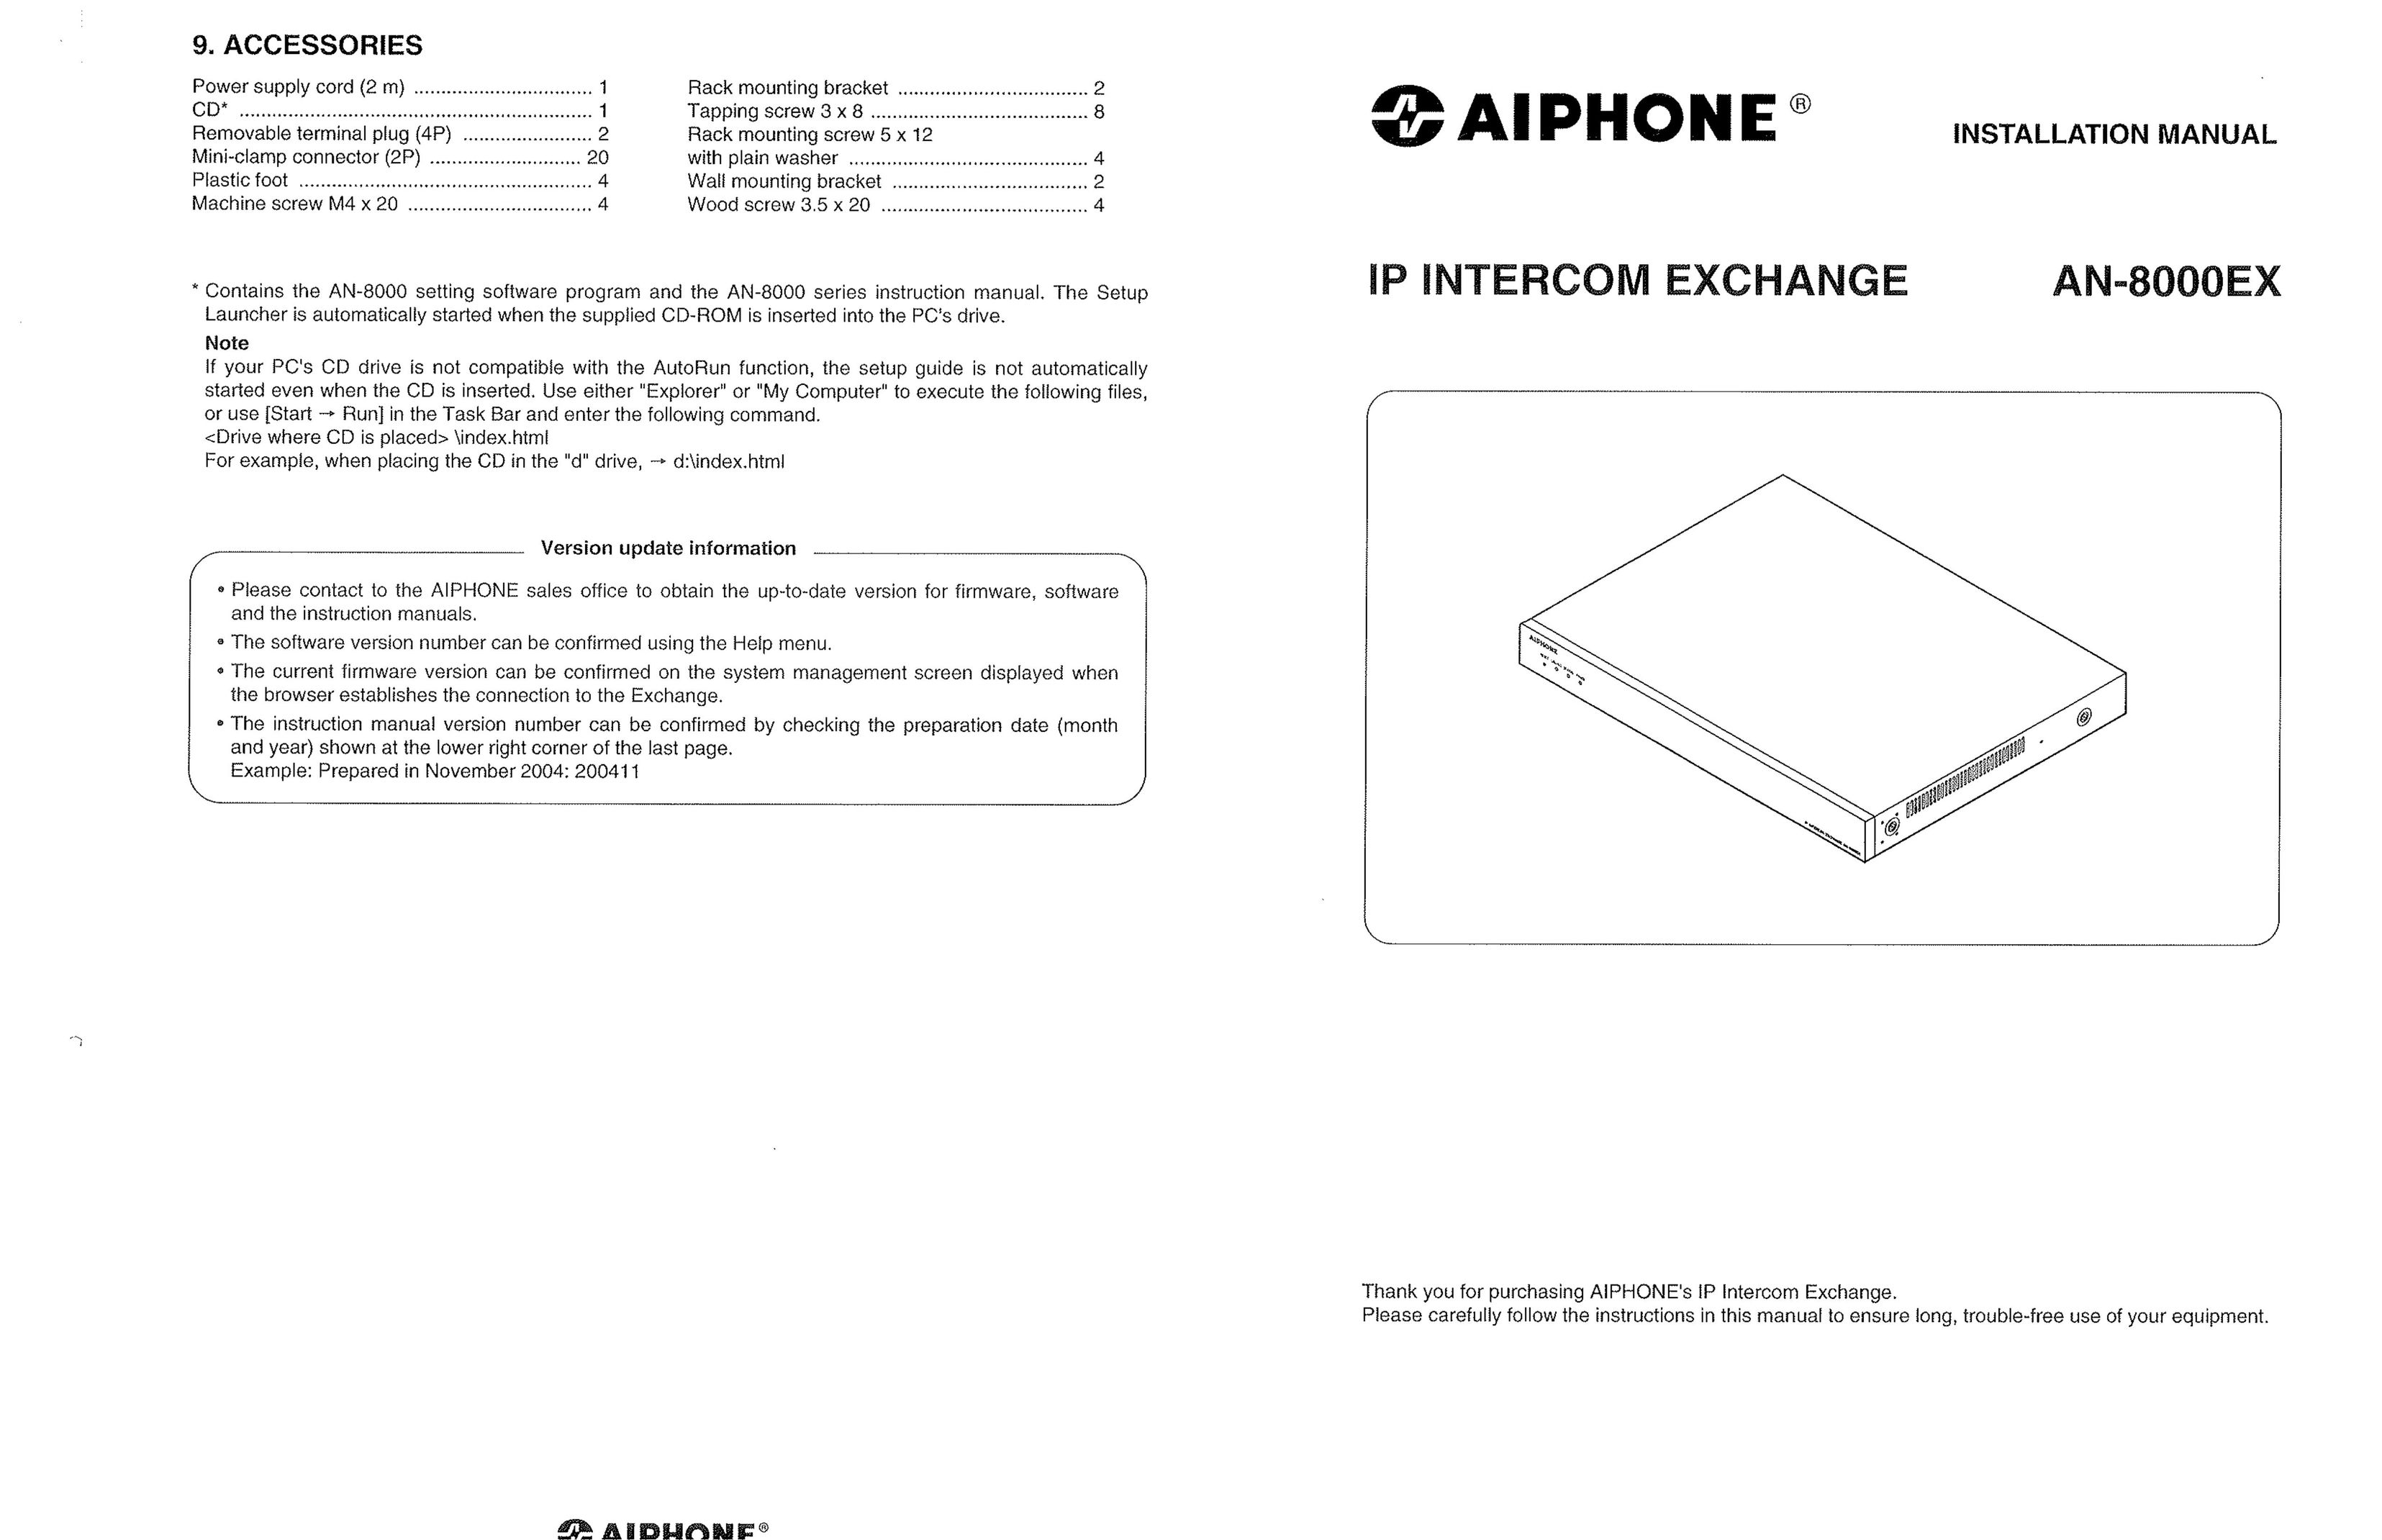 Aiphone AN-8000EX Intercom System User Manual